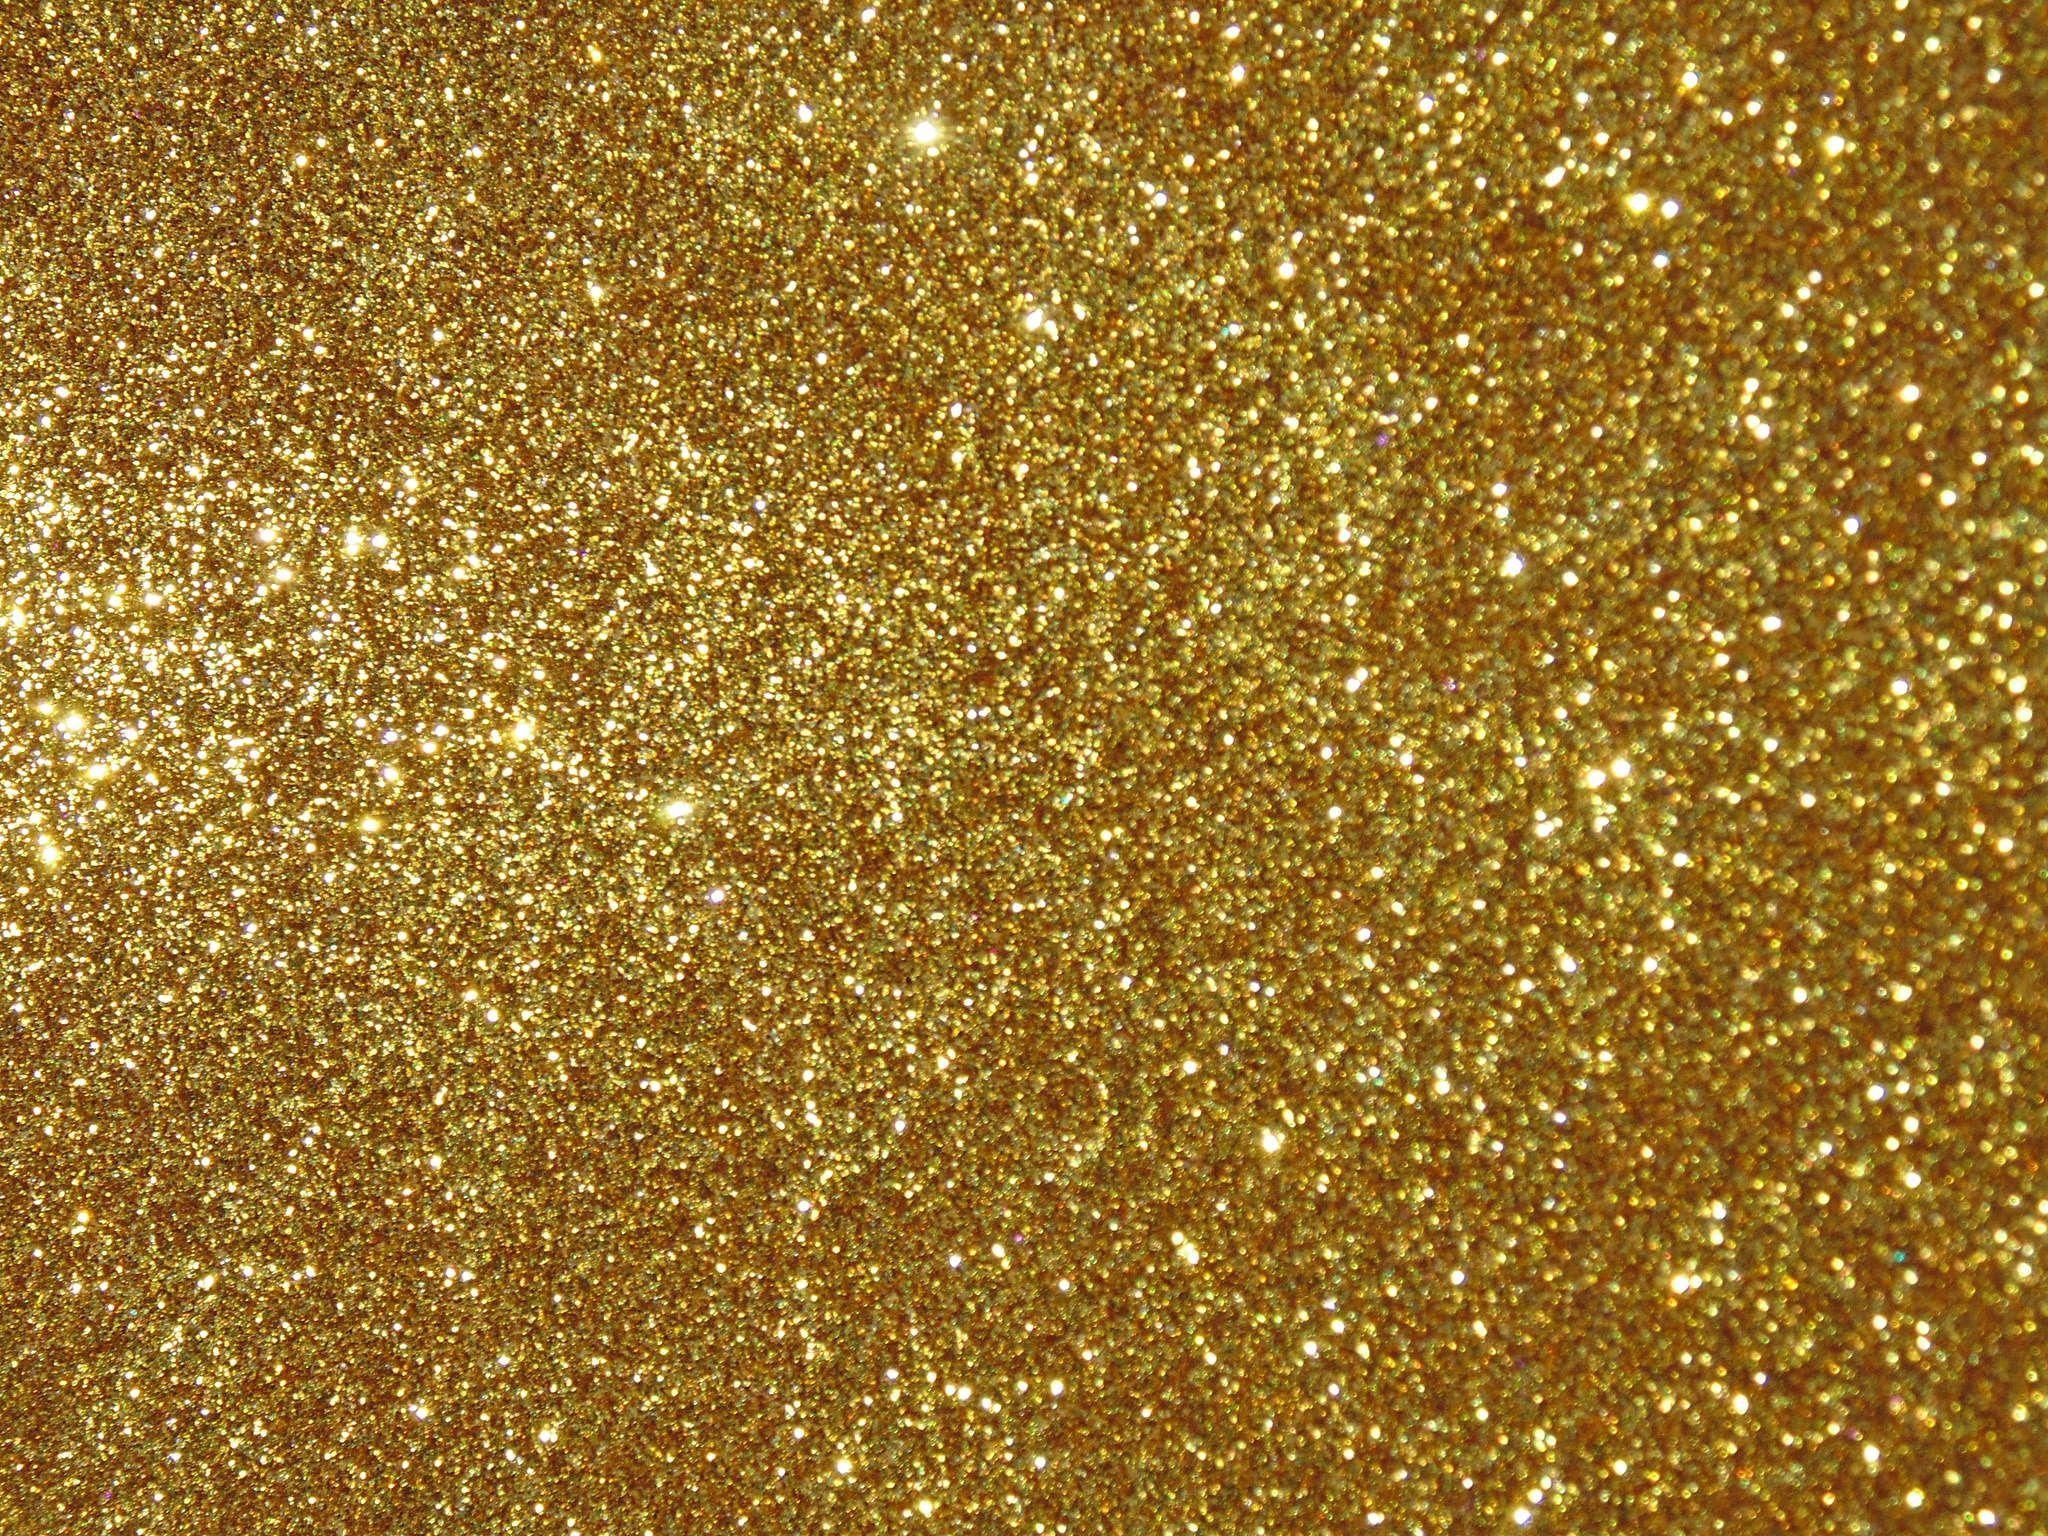 HD Quality Gold Glitter Image, Gold Glitter Wallpaper HD Base